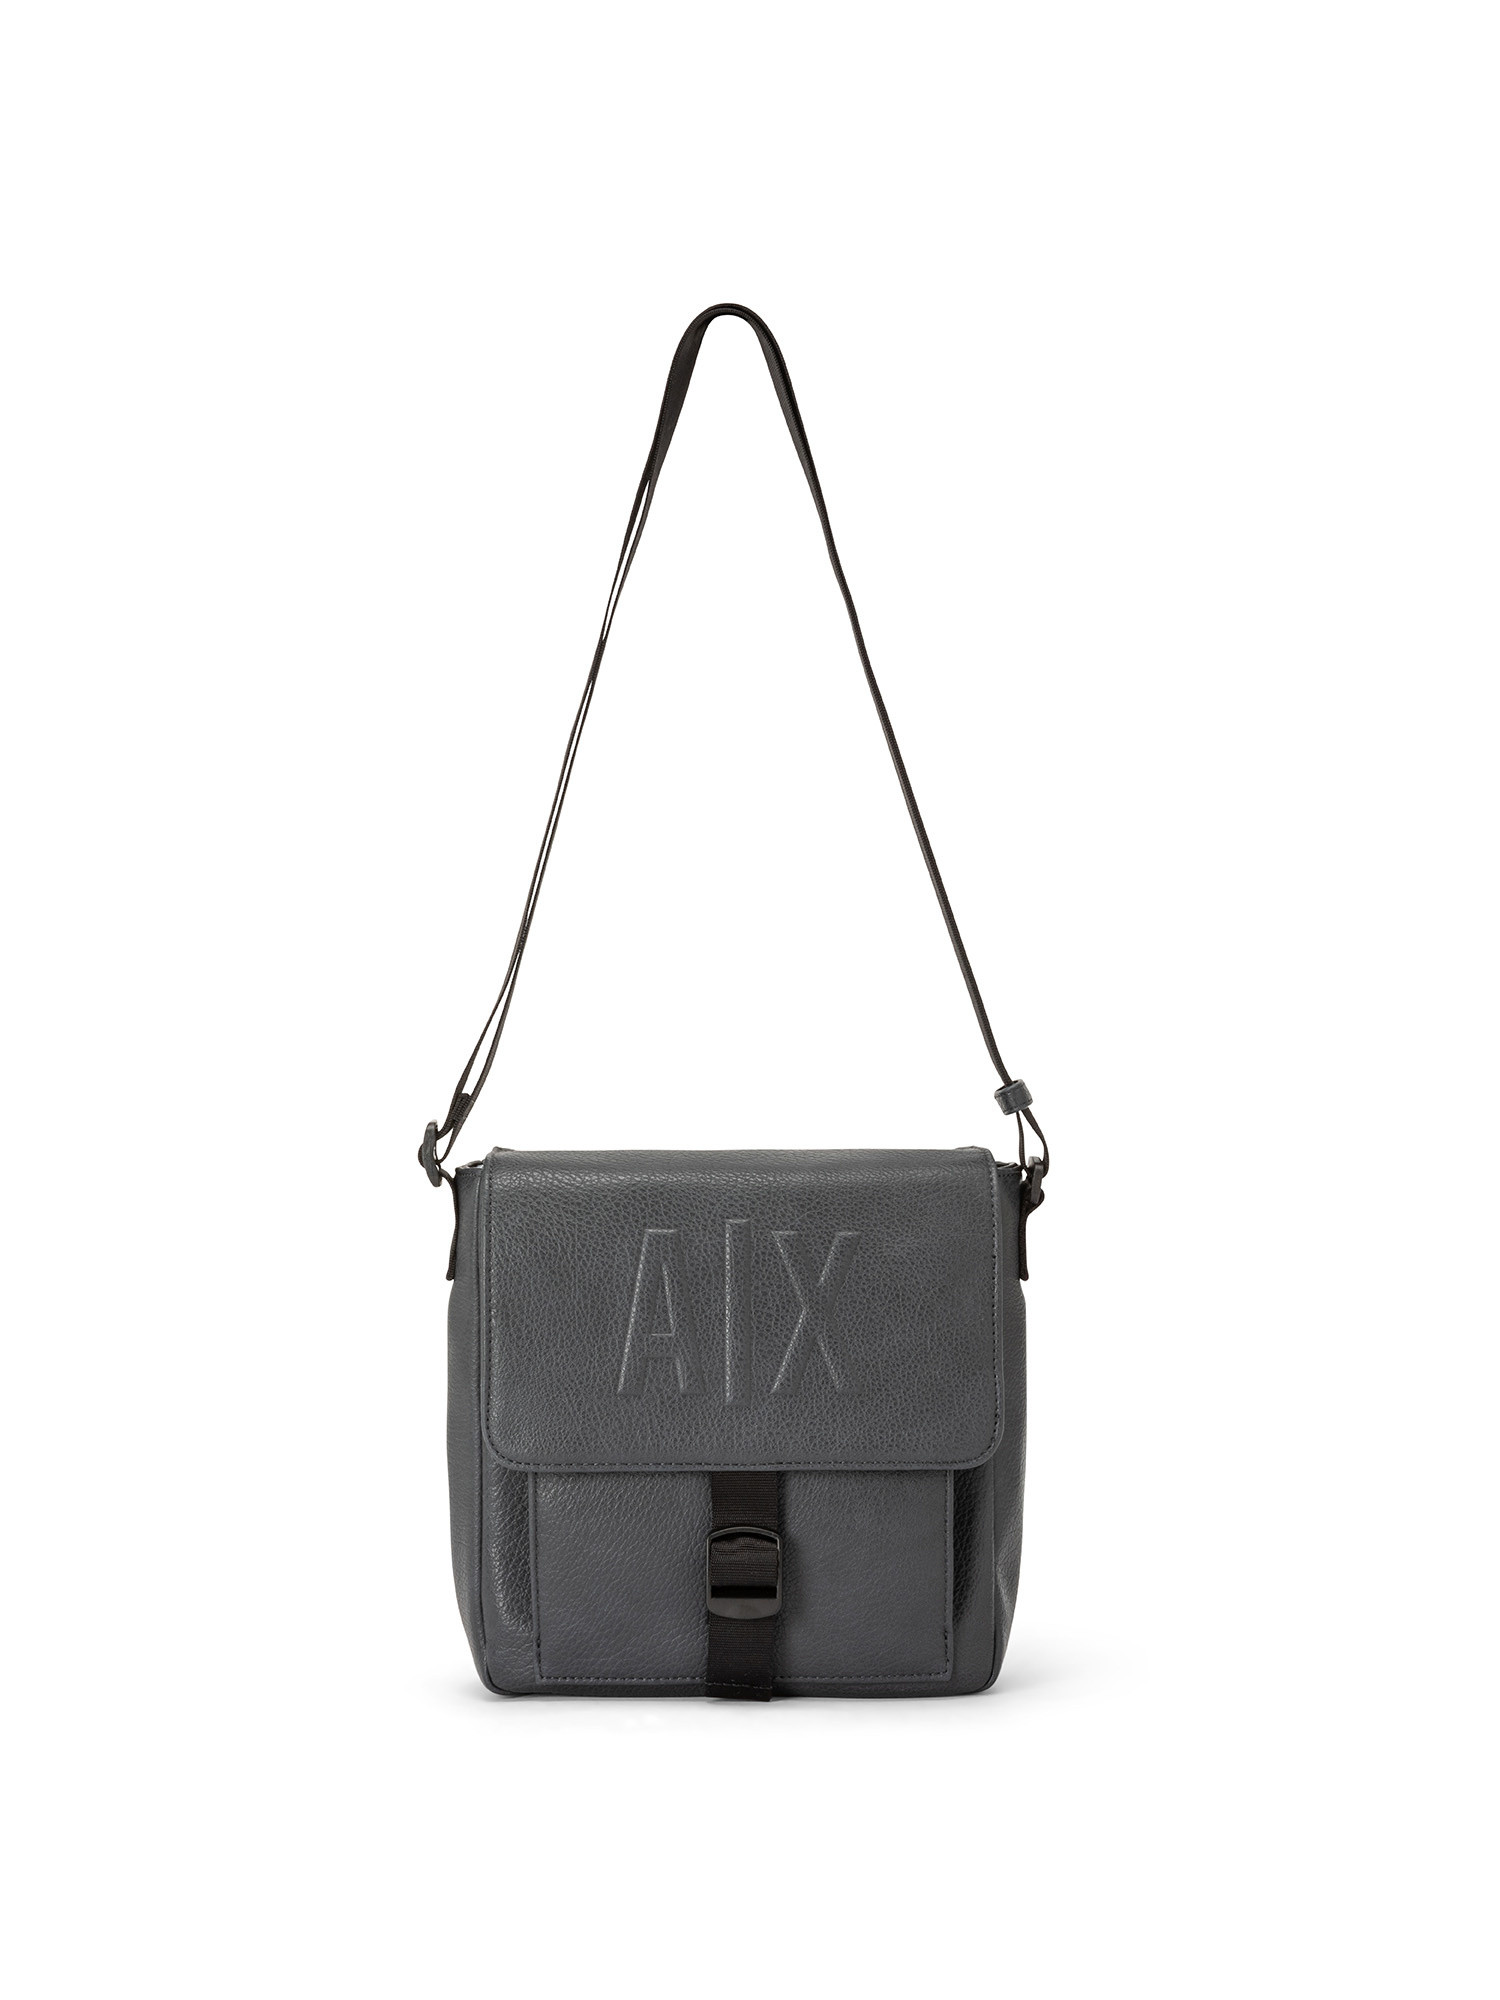 Armani Exchange - Bag with logo, Grey, large image number 0